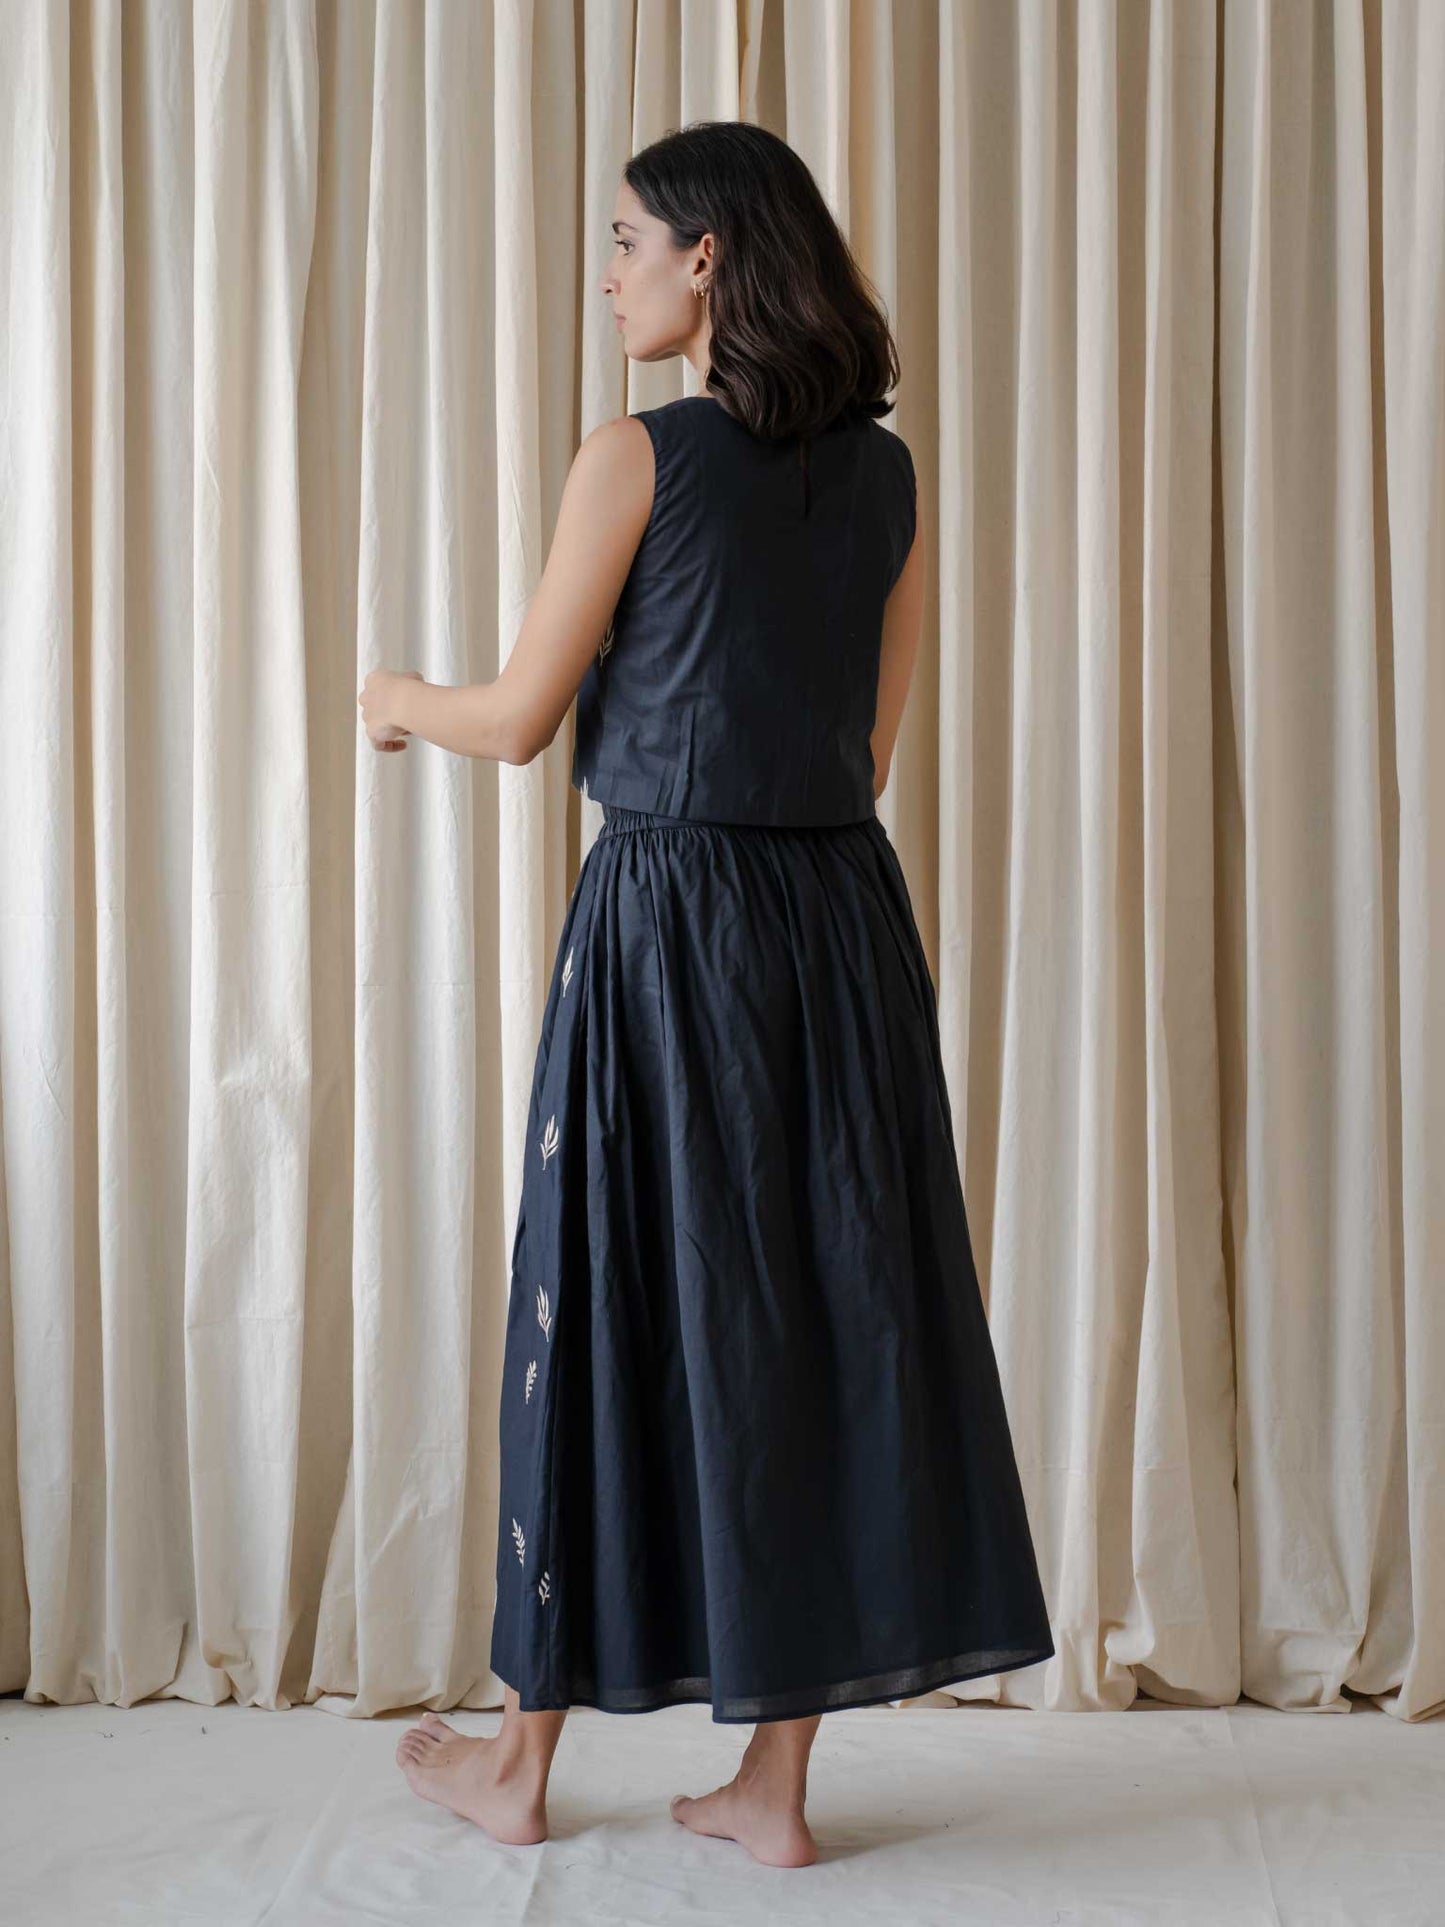 Vera Black Embroidery Gathered Skirt